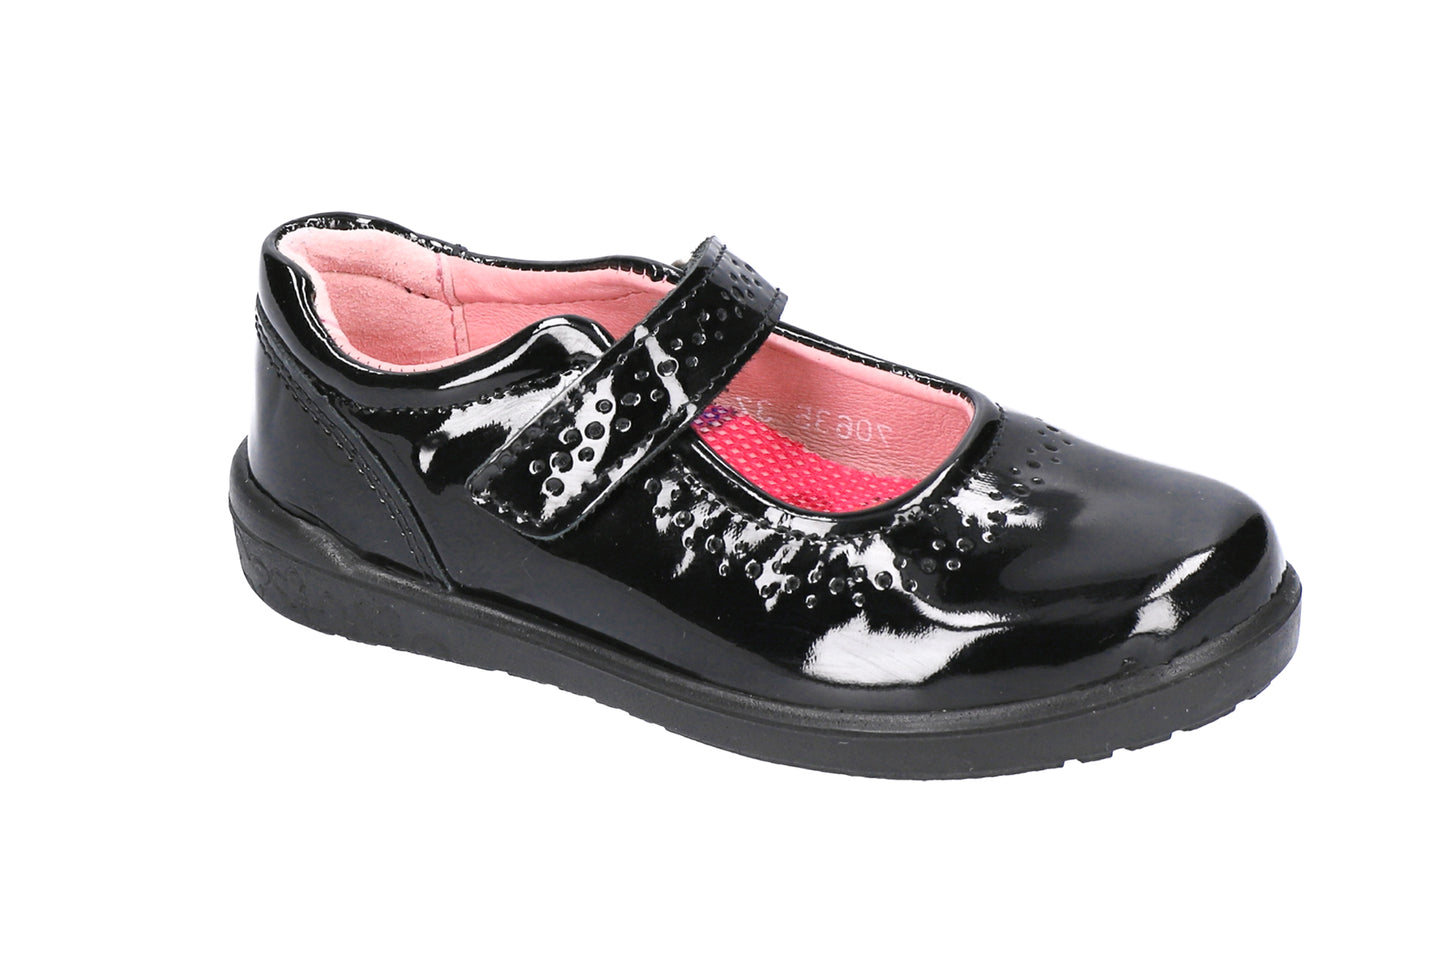 Lillia Black Patent Leather Girls School Shoe